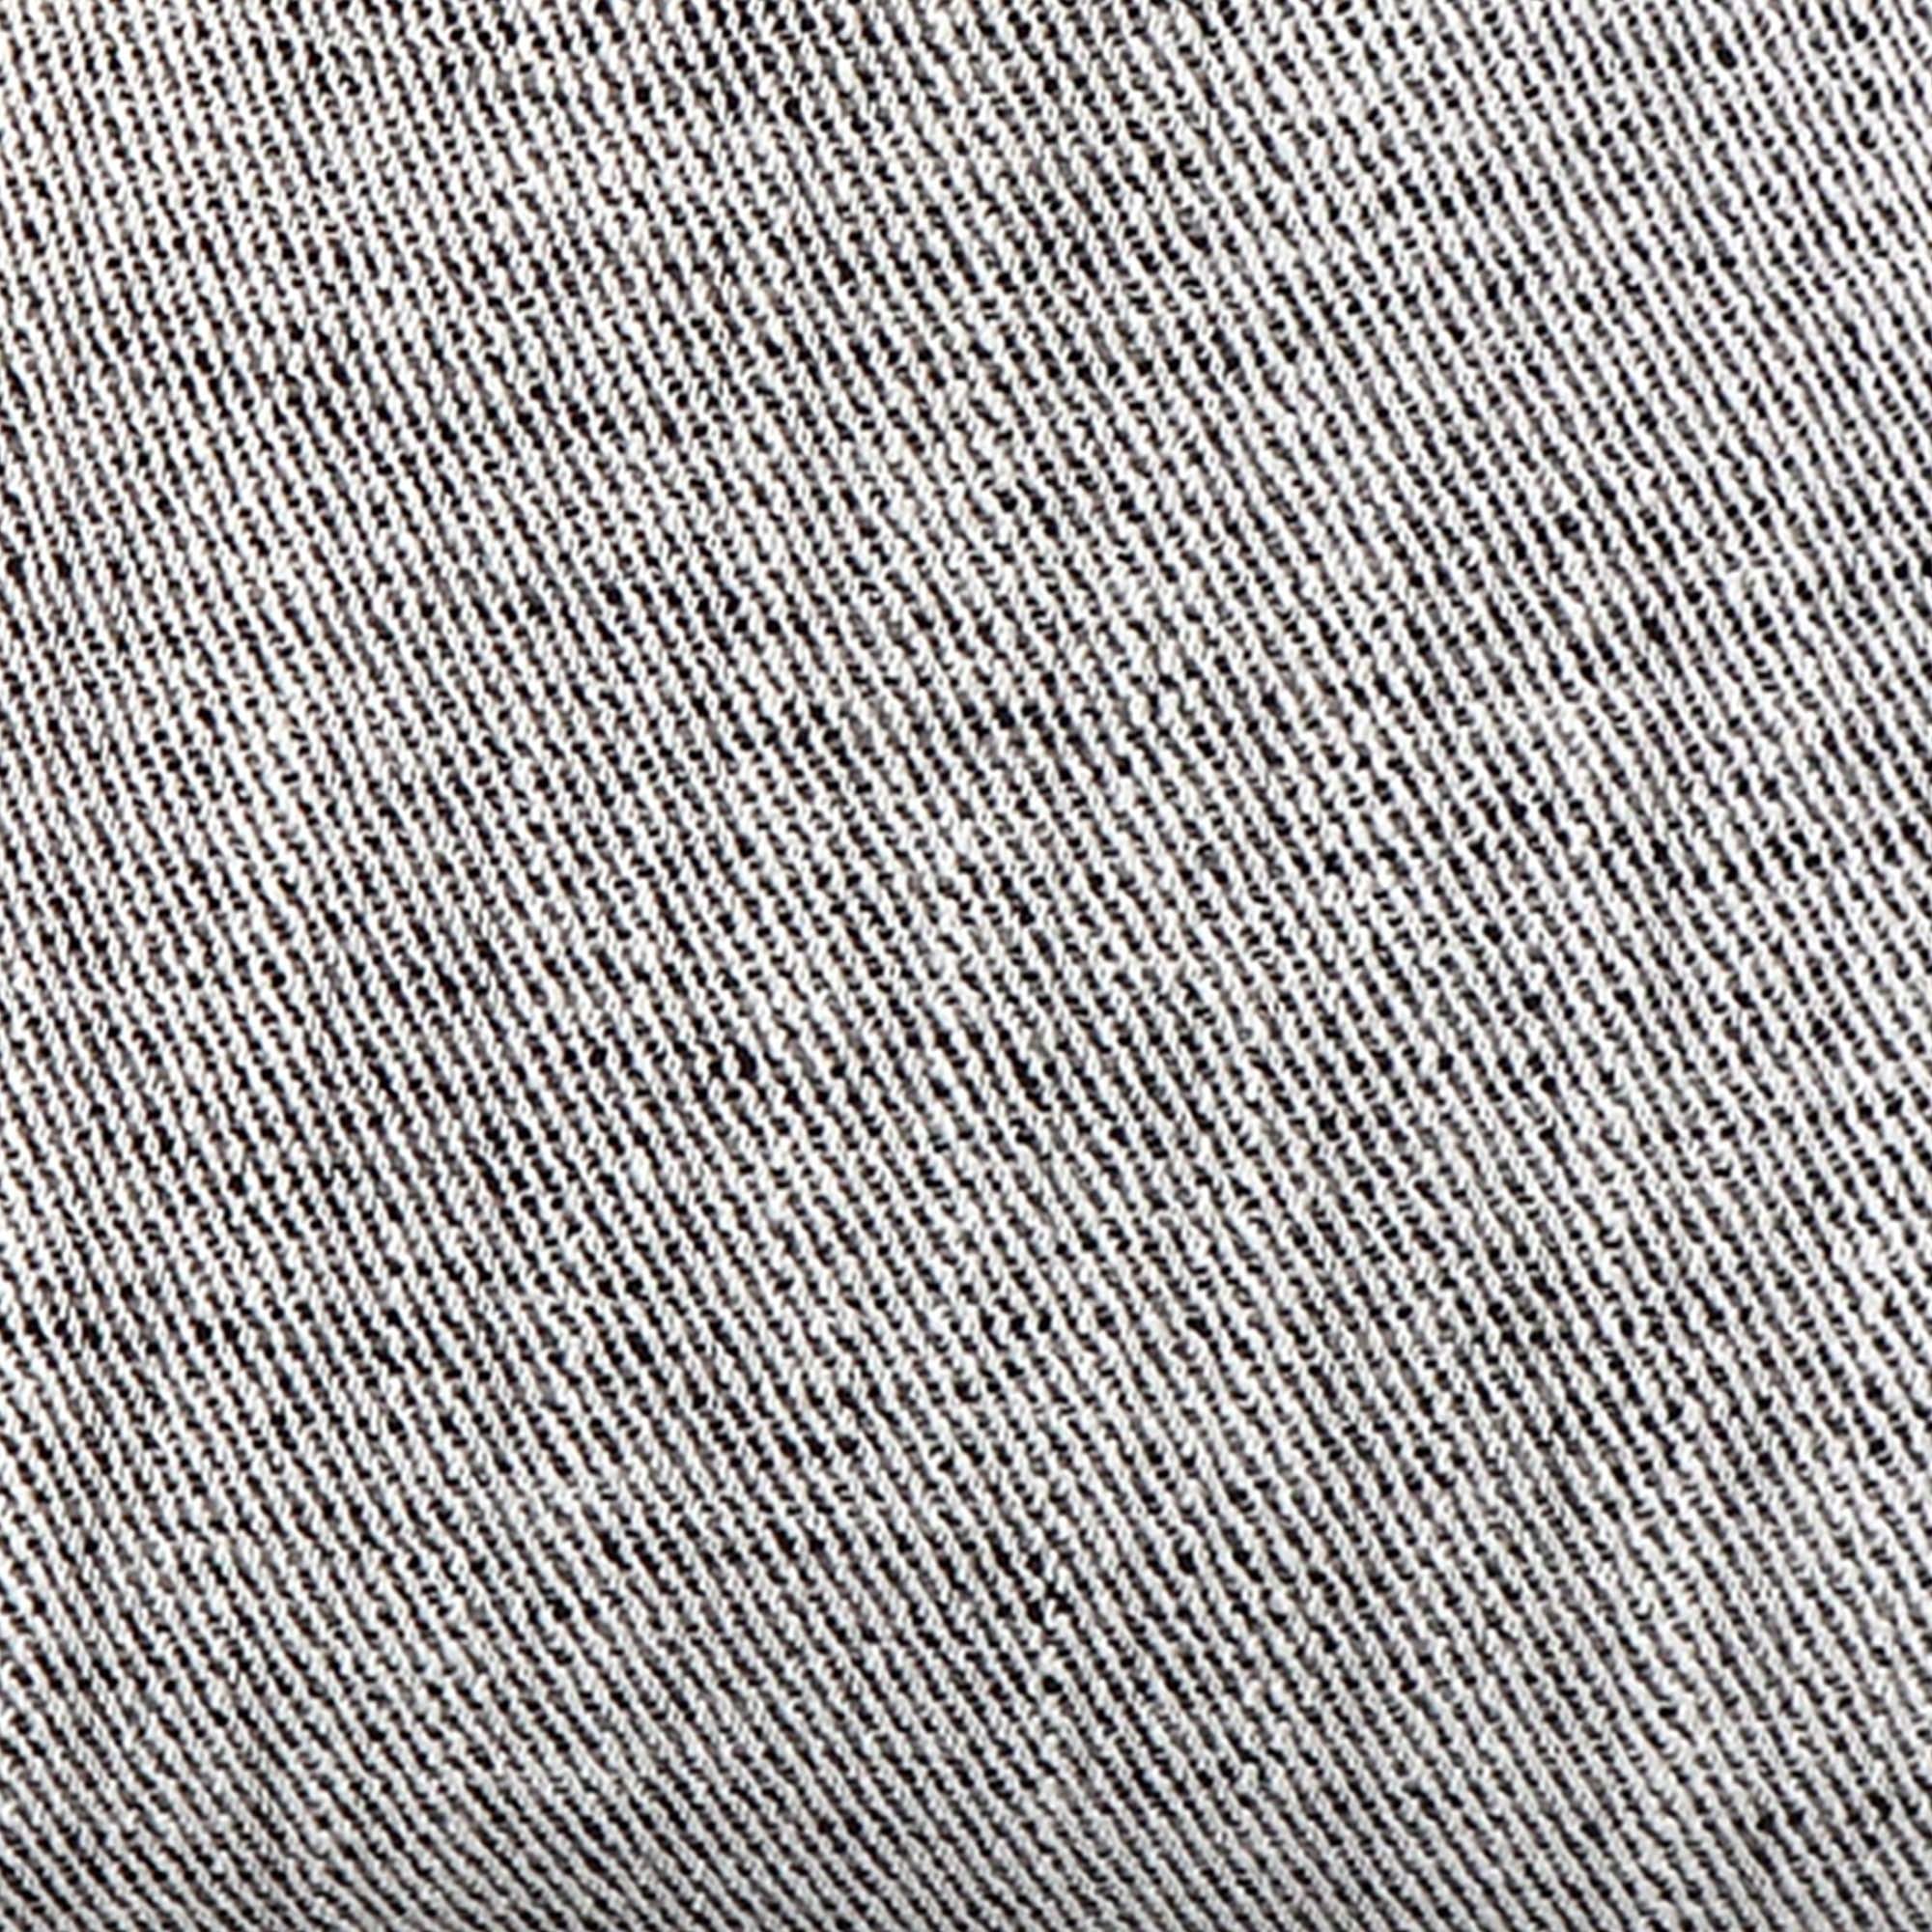 Everett Performance Twill Charcoal / 4x4 inch Fabric Swatch - Chloe & Olive